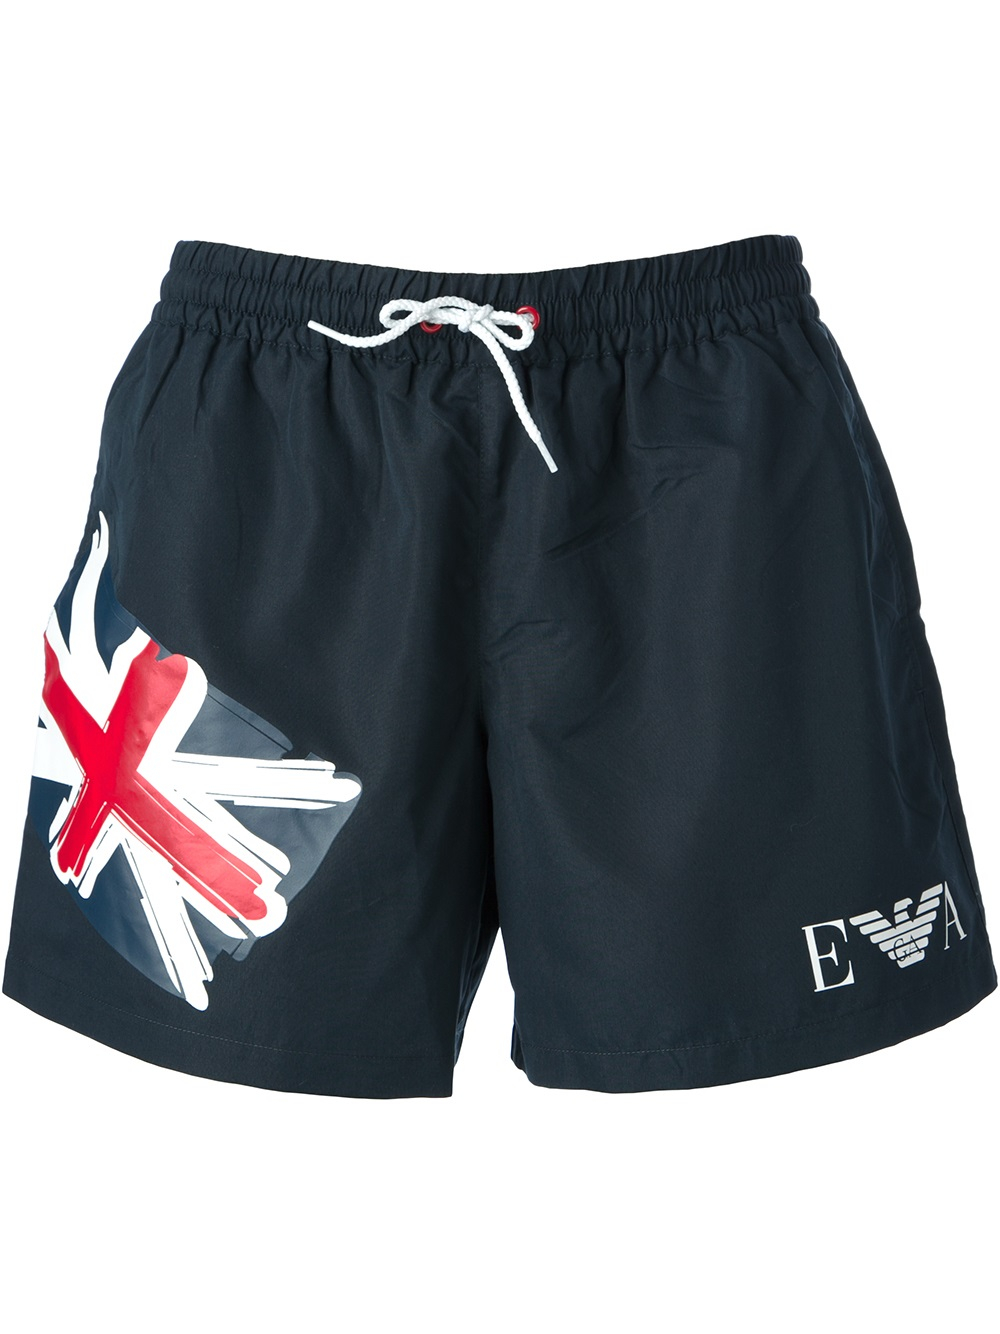 Lyst - Emporio Armani Union Jack Print Swim Shorts in Blue for Men